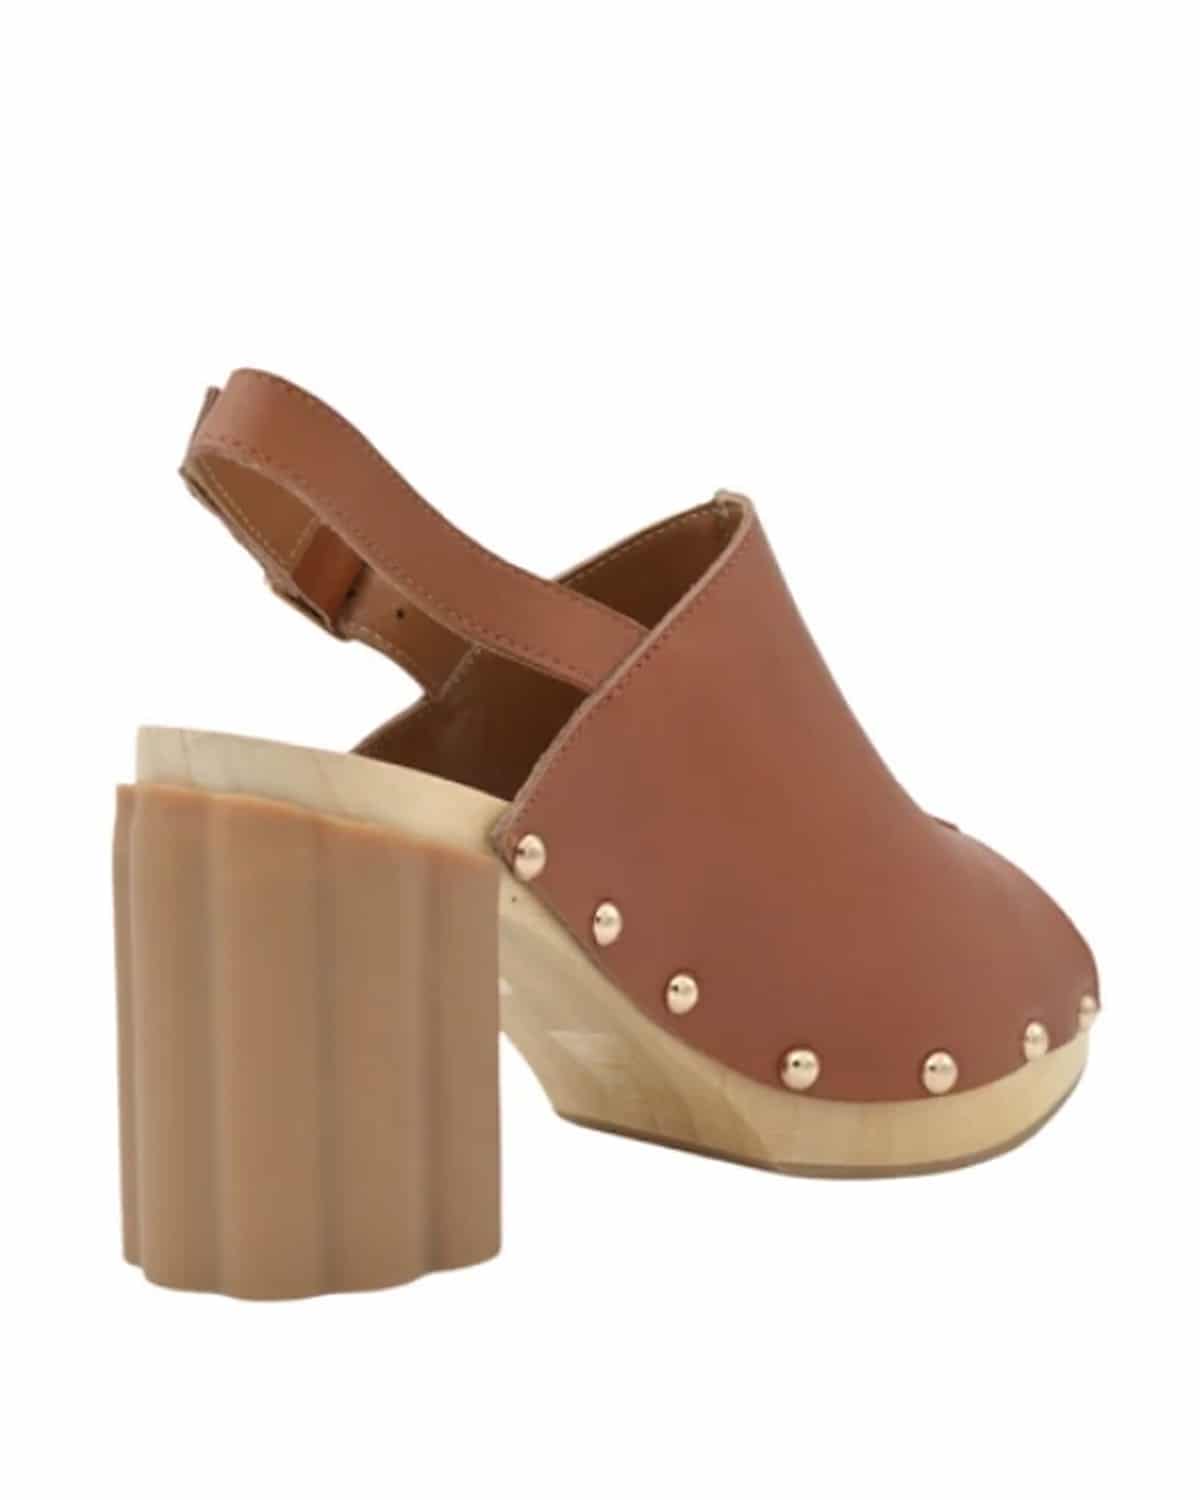 Heeled clogs - Anna shoes & more